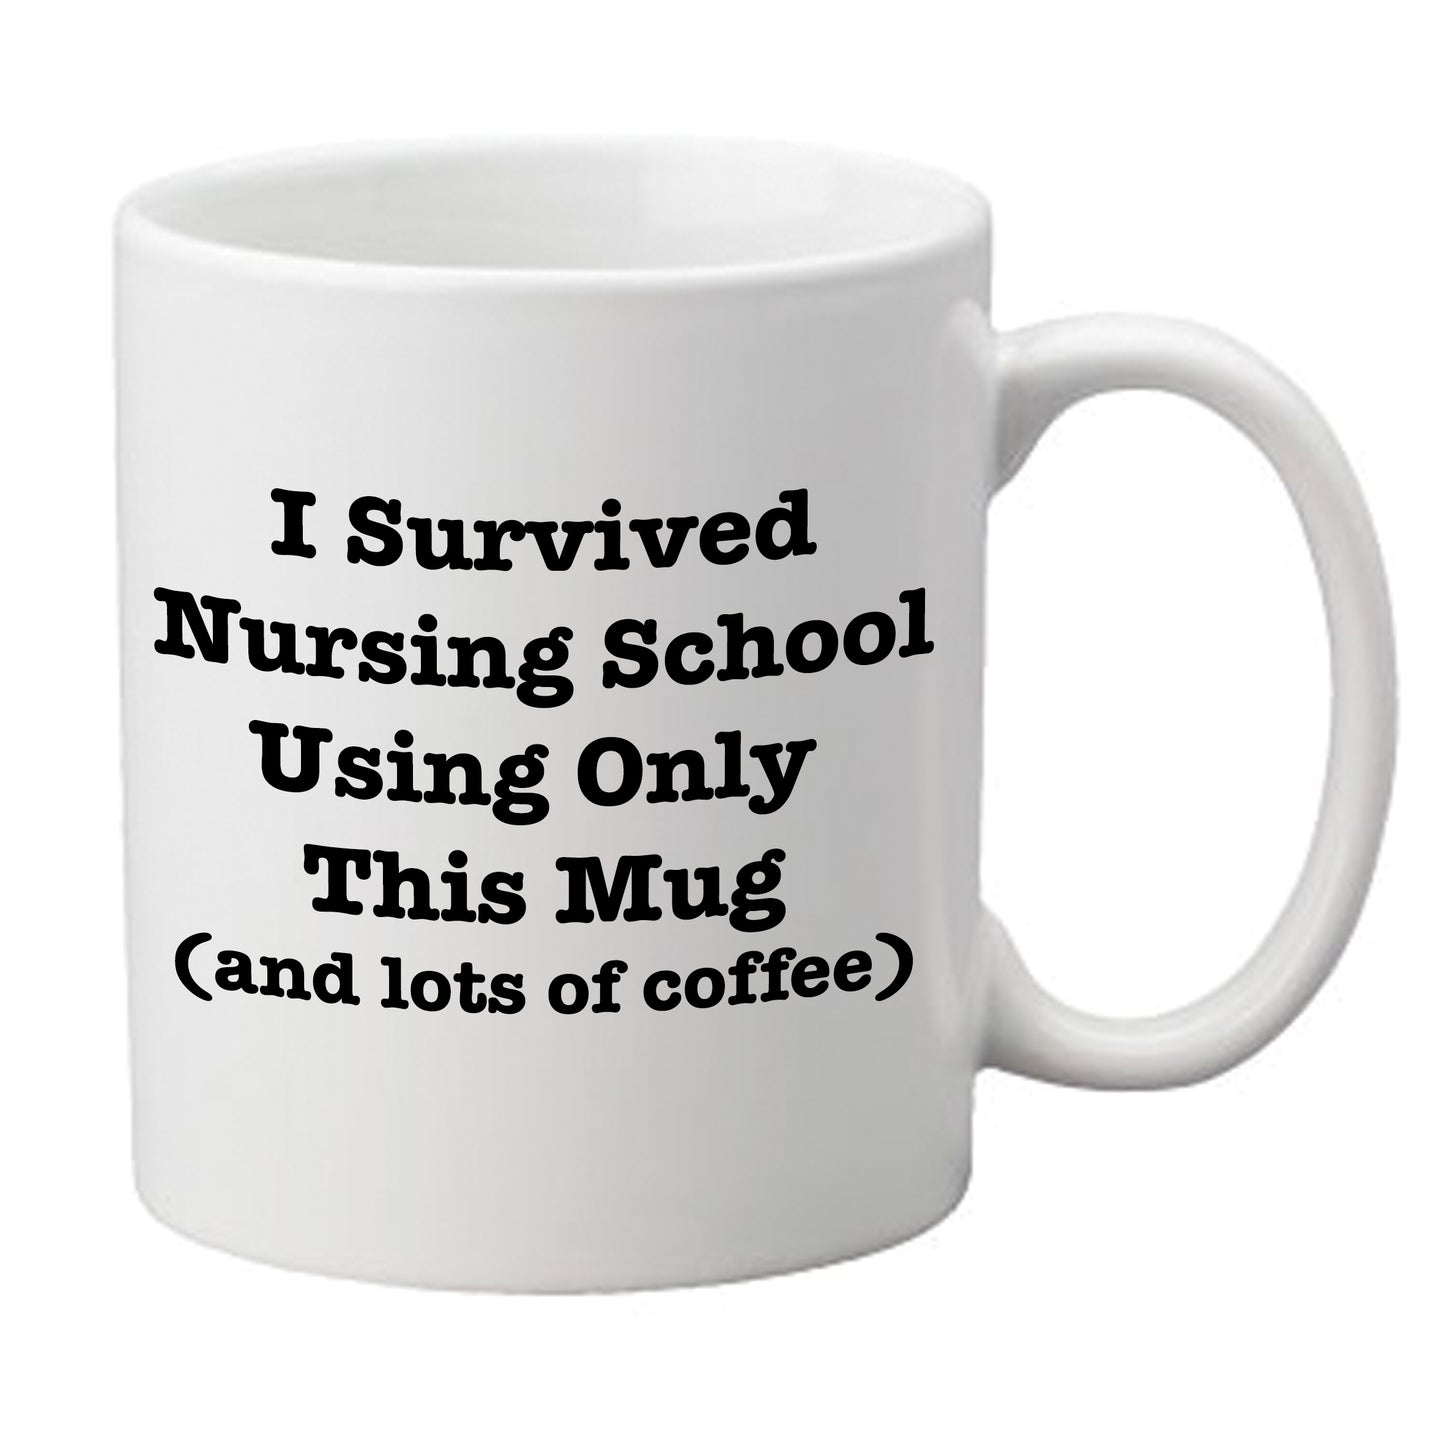 'I Survived Nursing School' Mug